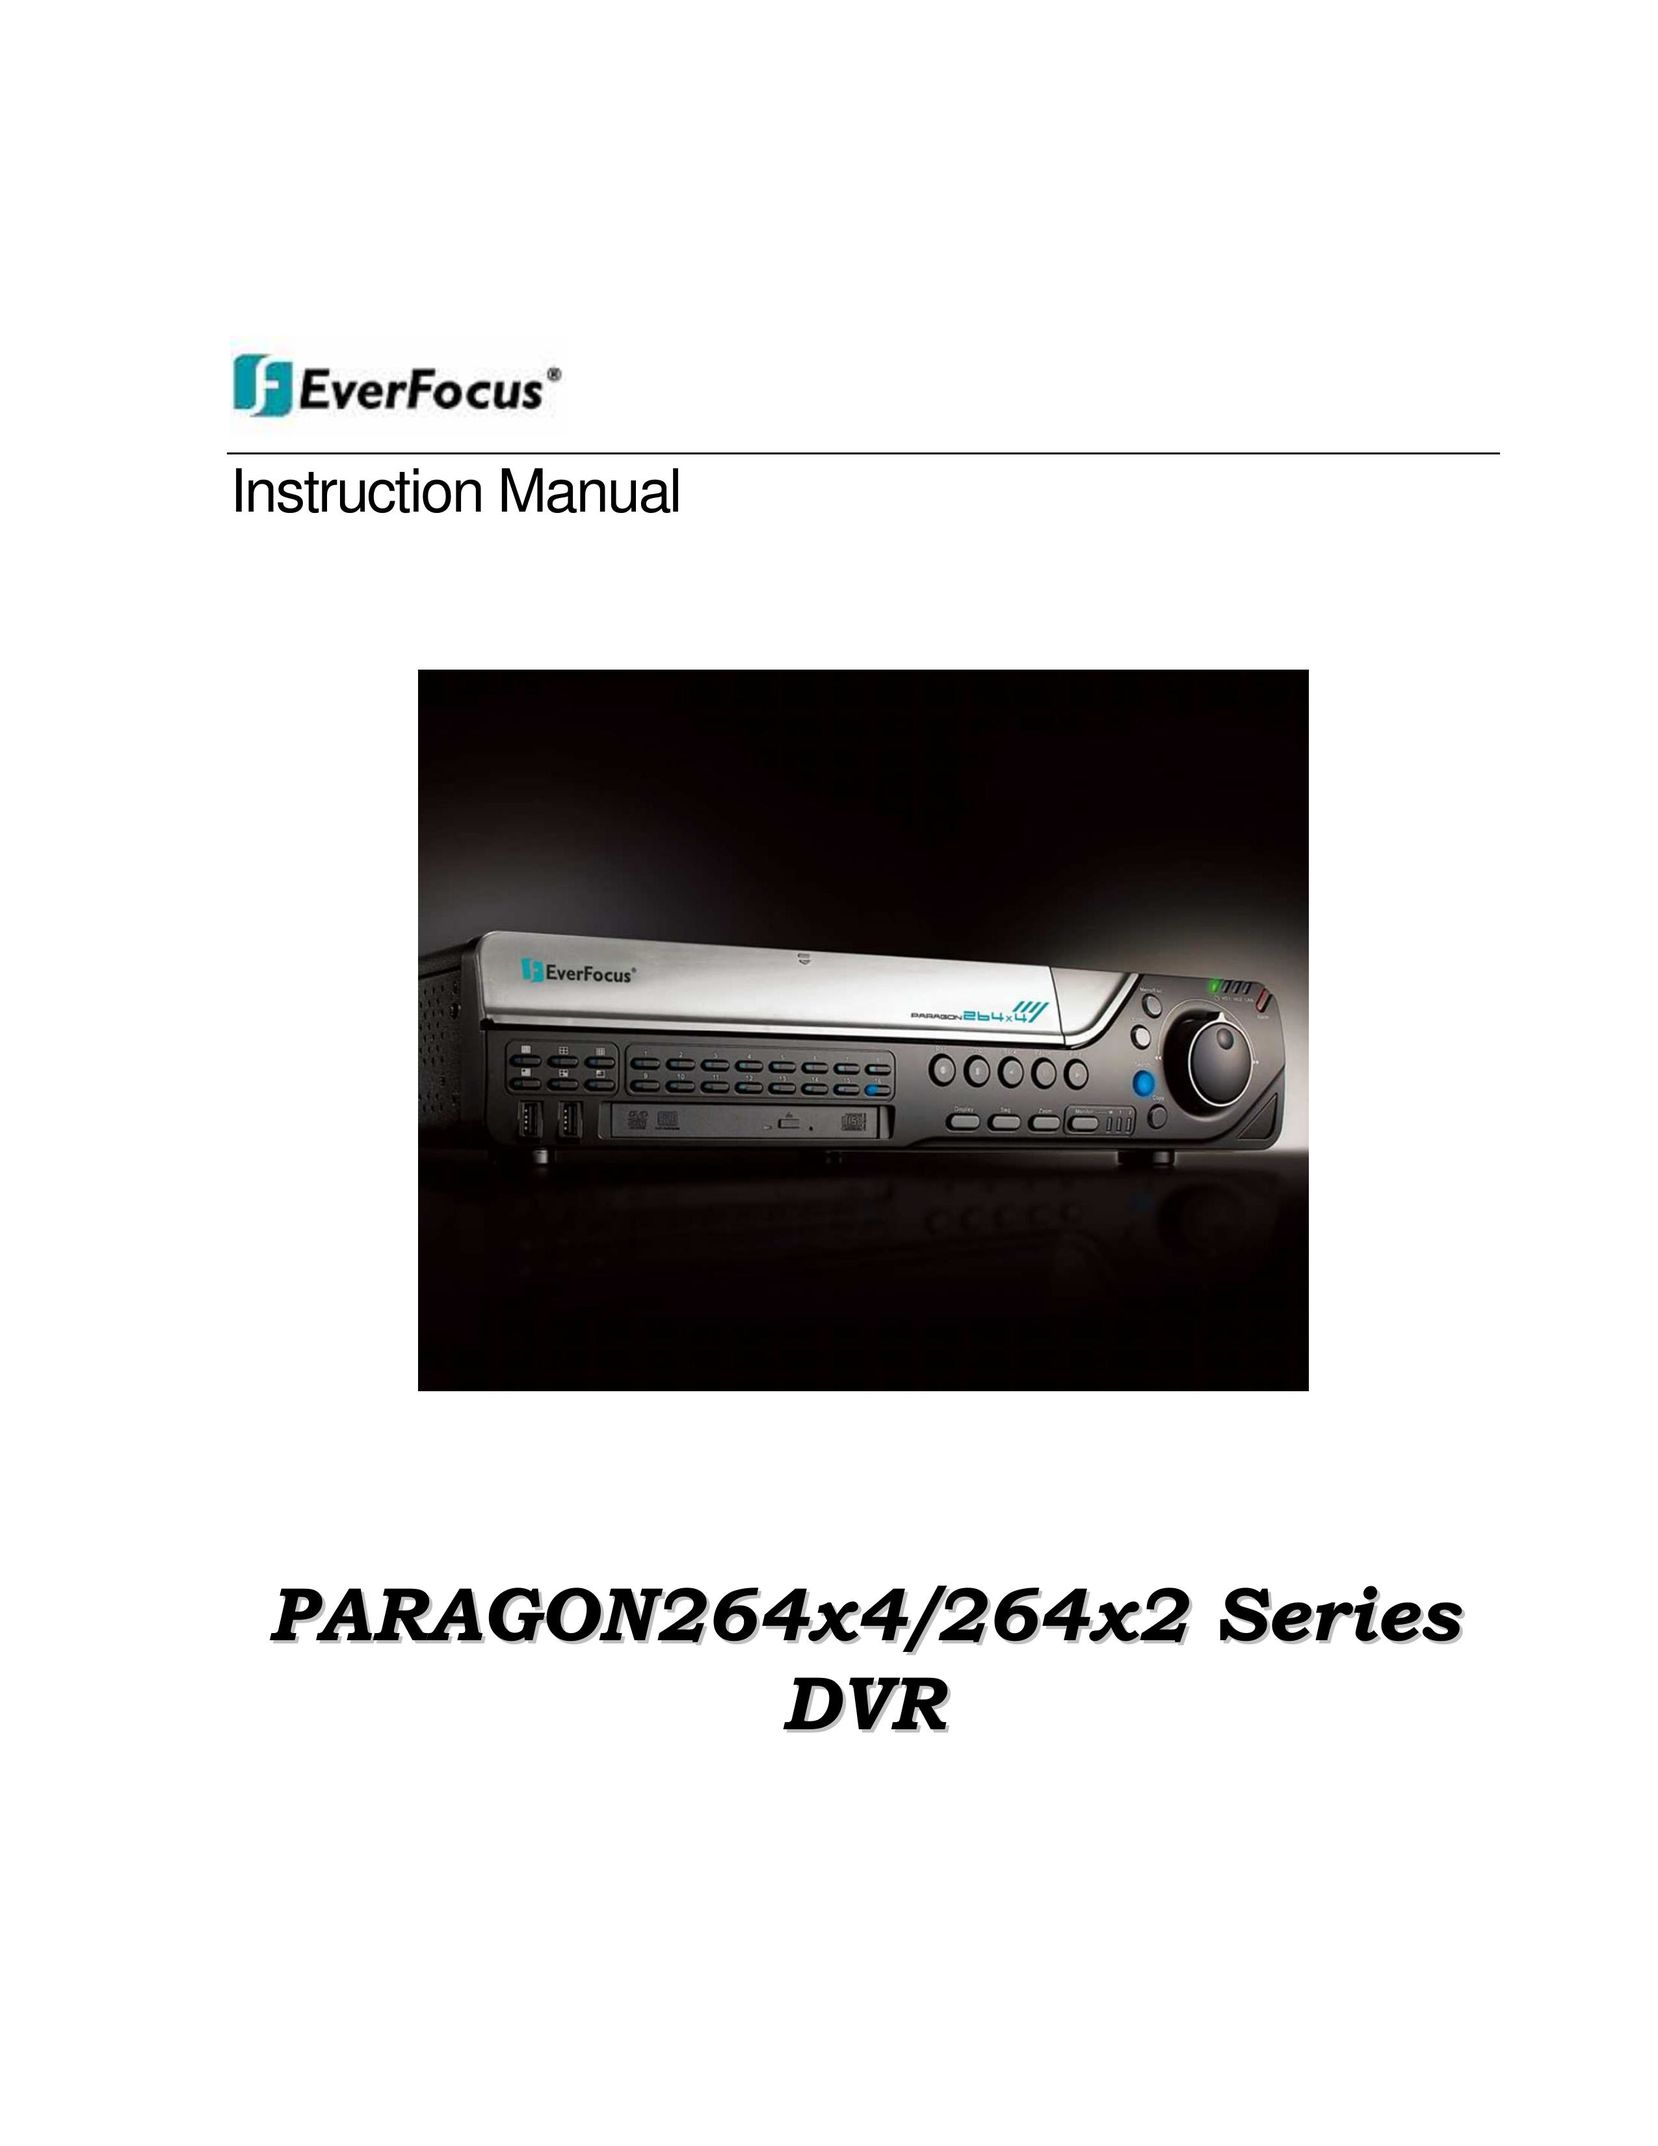 EverFocus 264x4 DVR User Manual